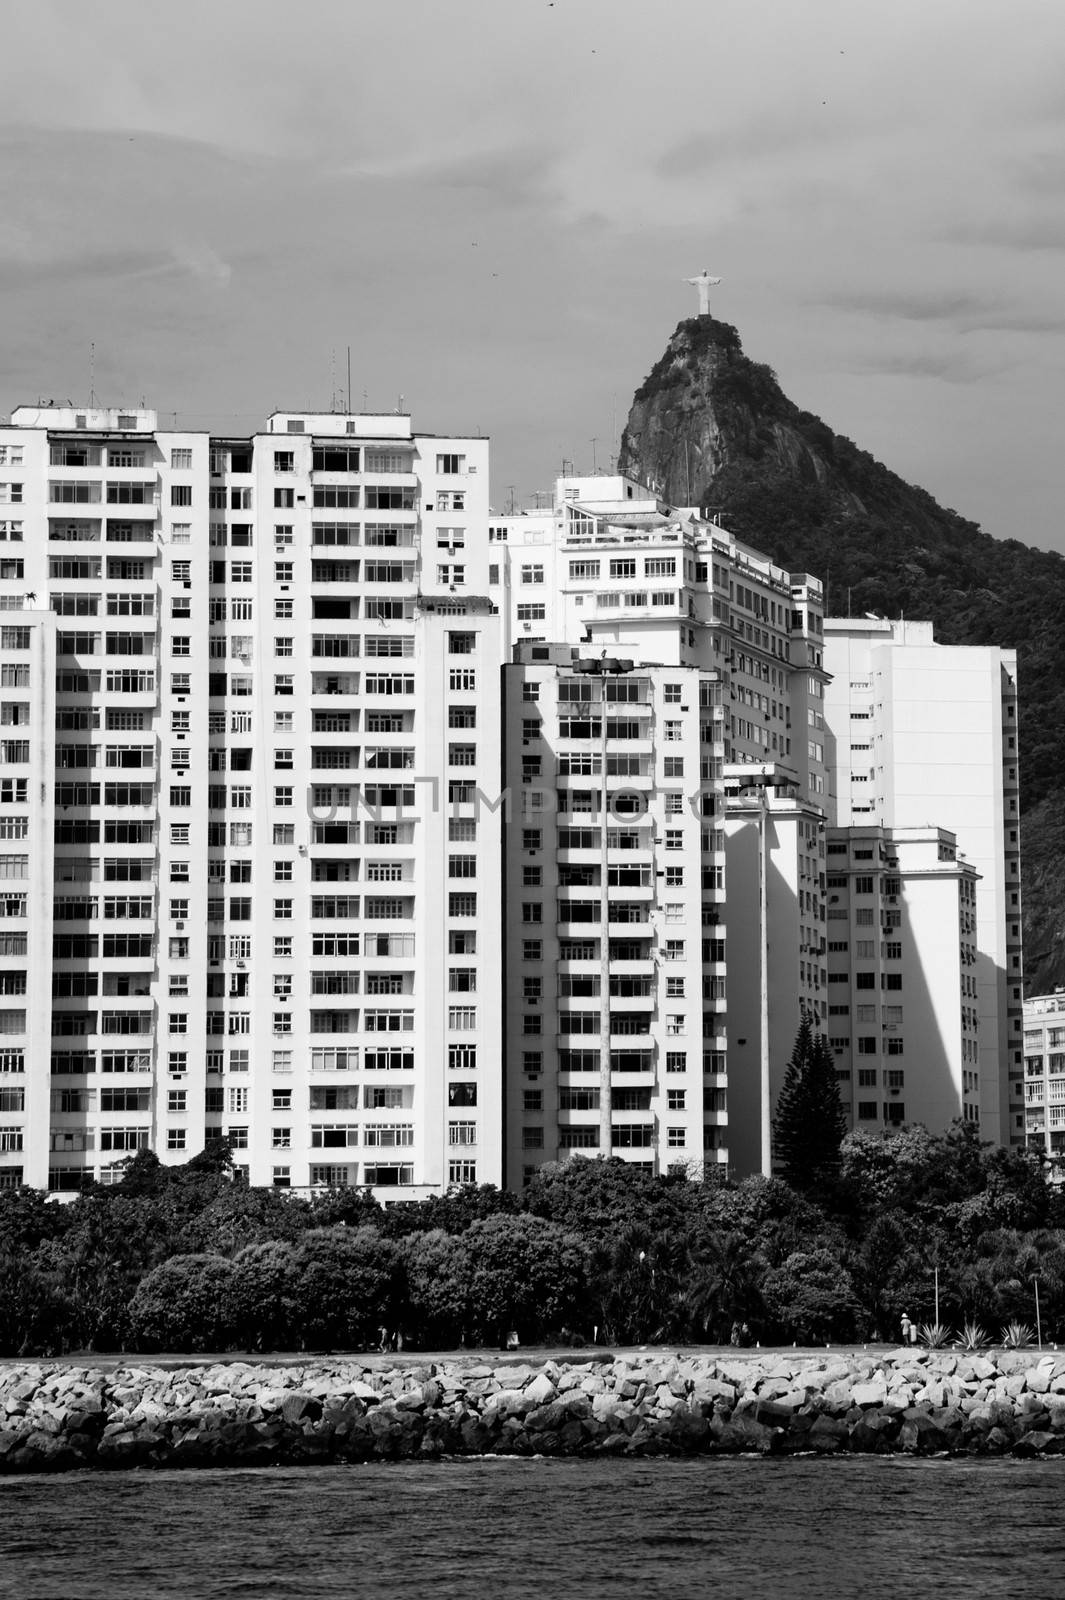 Rio de Janeiro with the statue of Christ the Redeemer overhead.